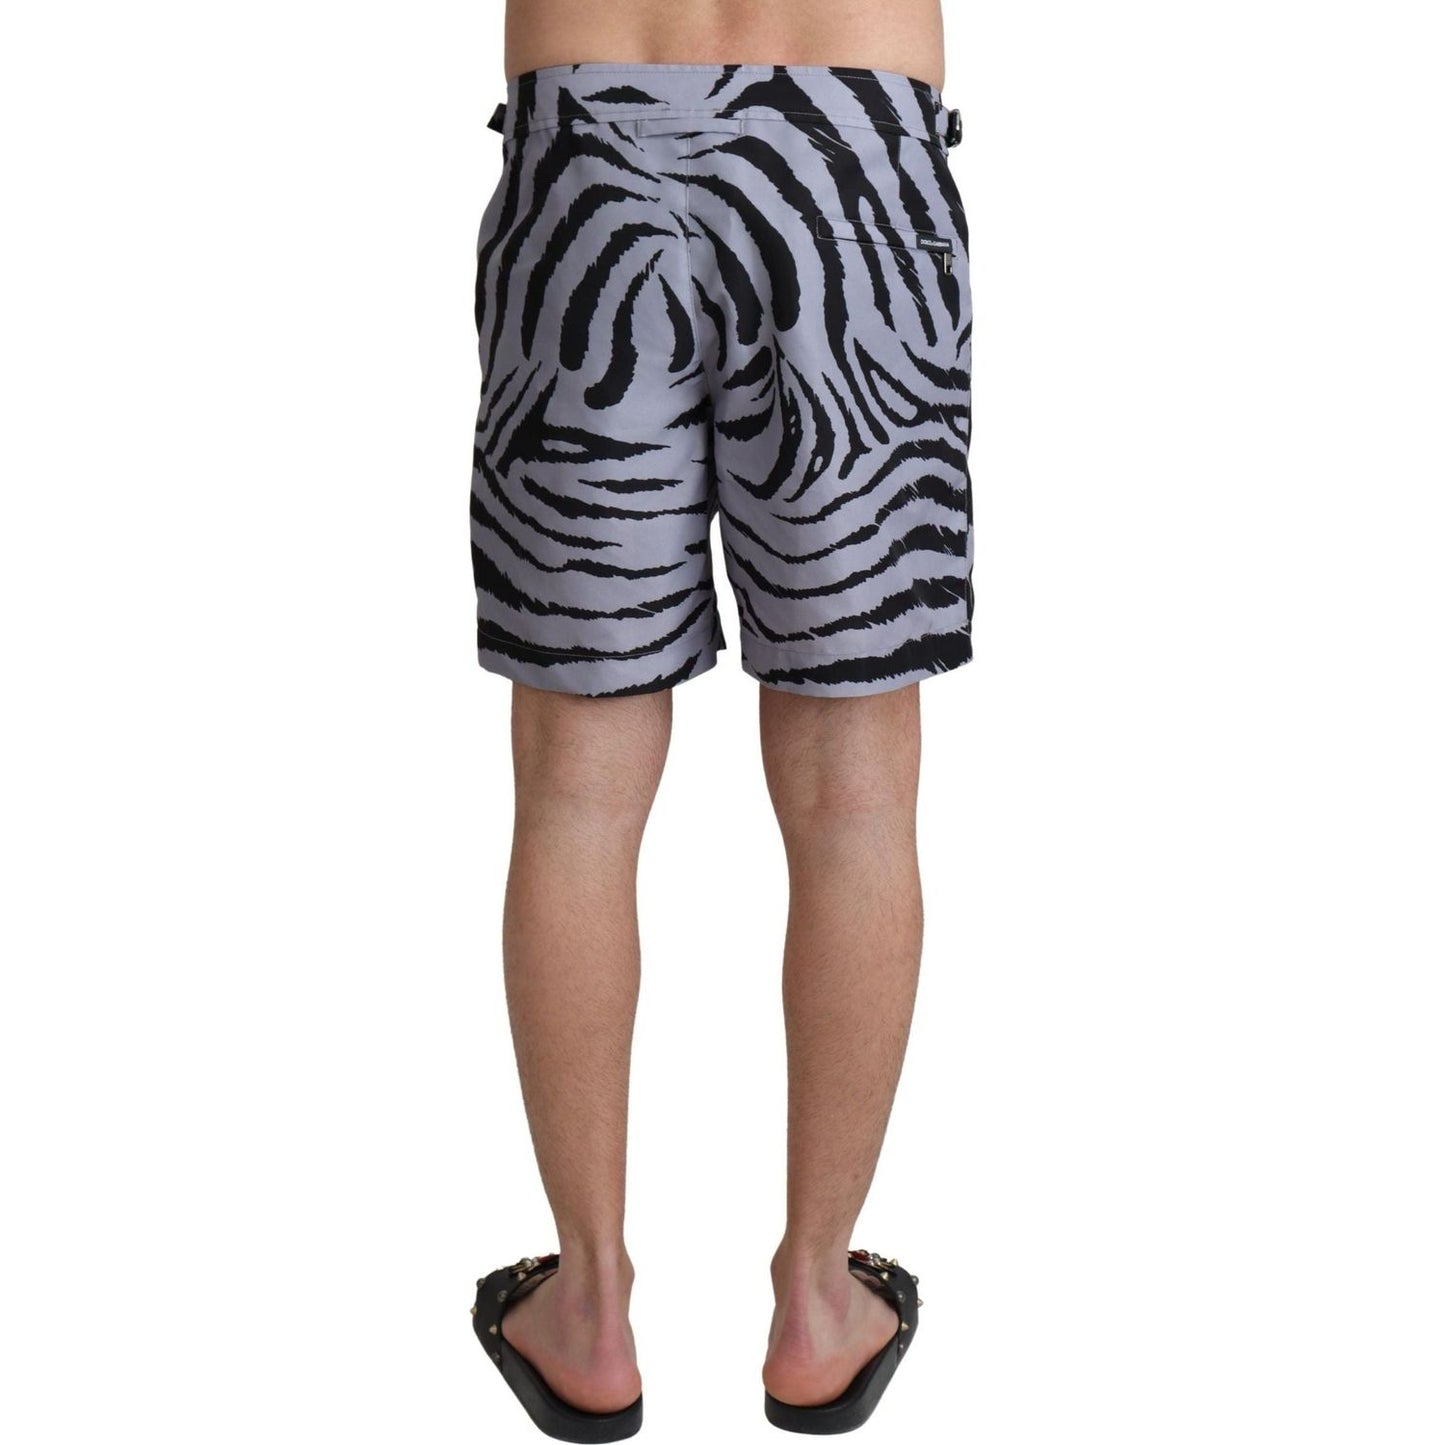 Dolce & Gabbana Elegant Gray Zebra Print Swim Trunks gray-zebra-print-beachwear-shorts IMG_0856-scaled-f350e3af-27c.jpg